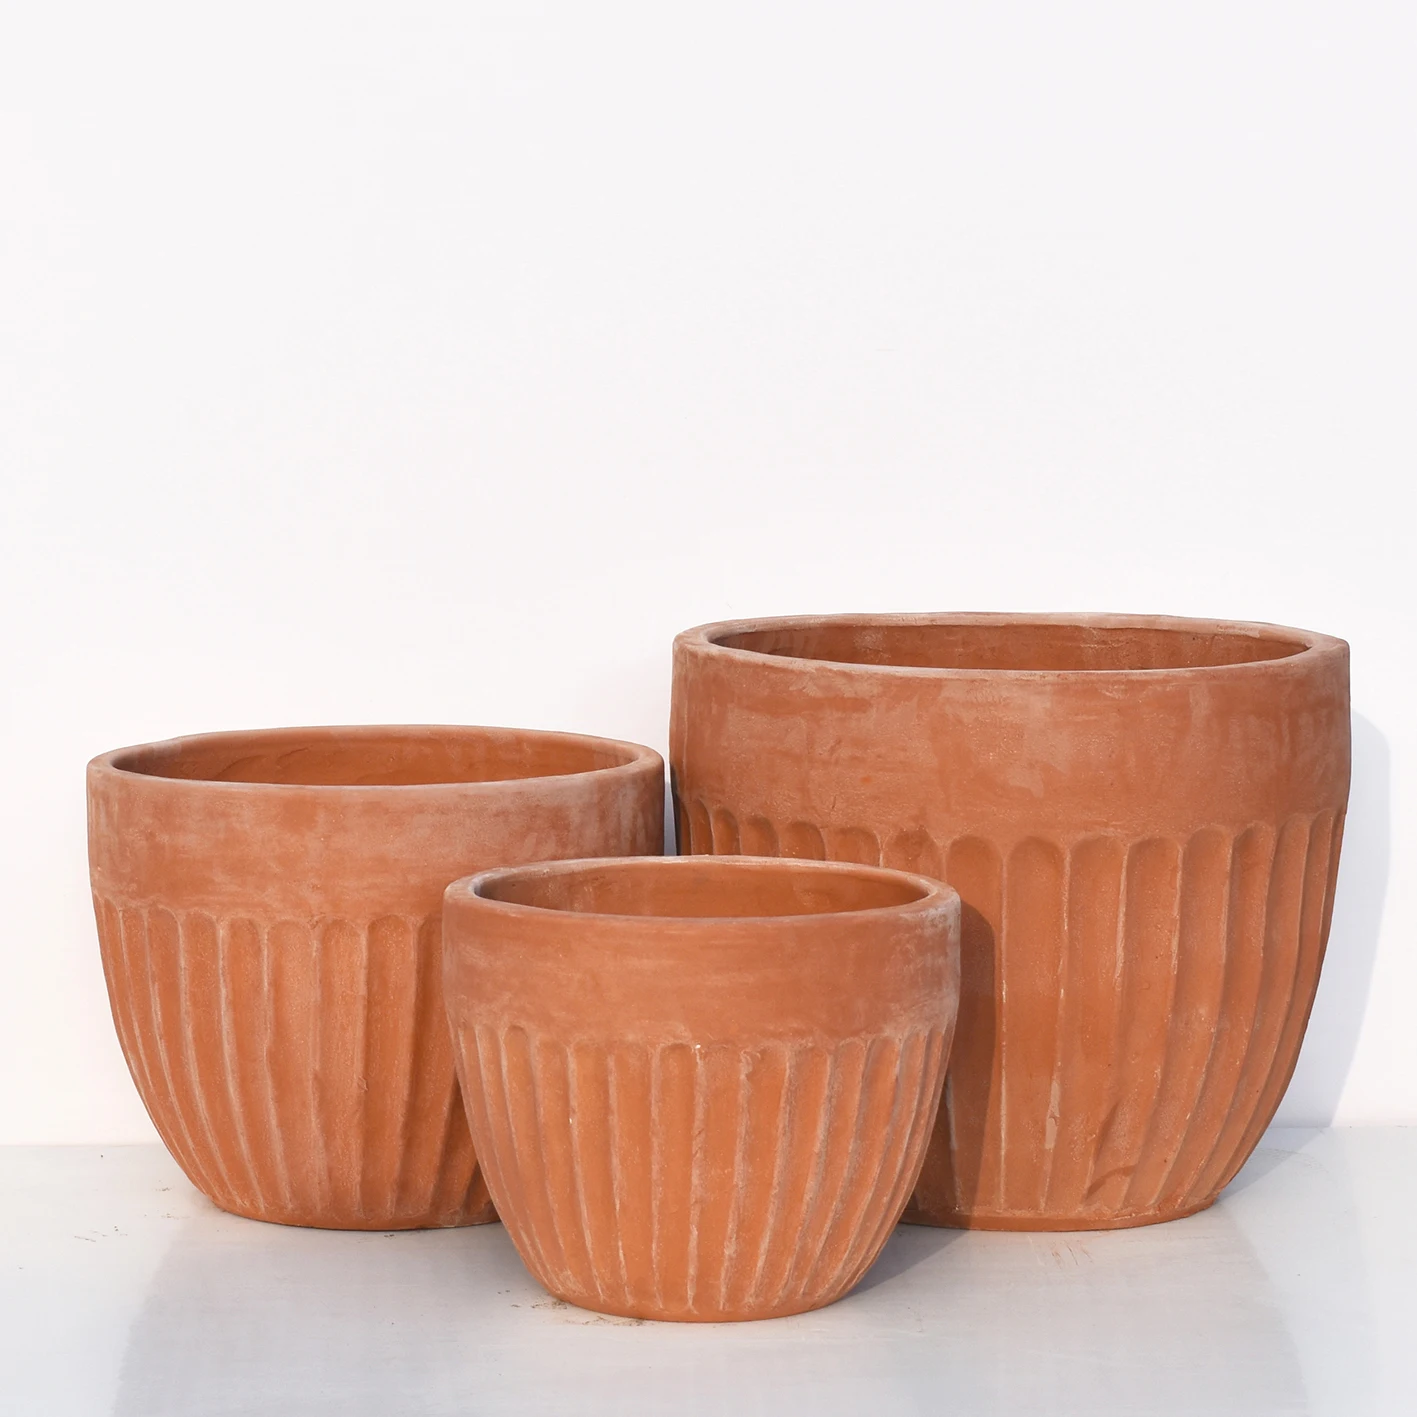 Wholesale Handmade Terracotta Clay Garden Planter Big Ceramic Flower Pot for Indoor and Outdoor Nursery Decoration